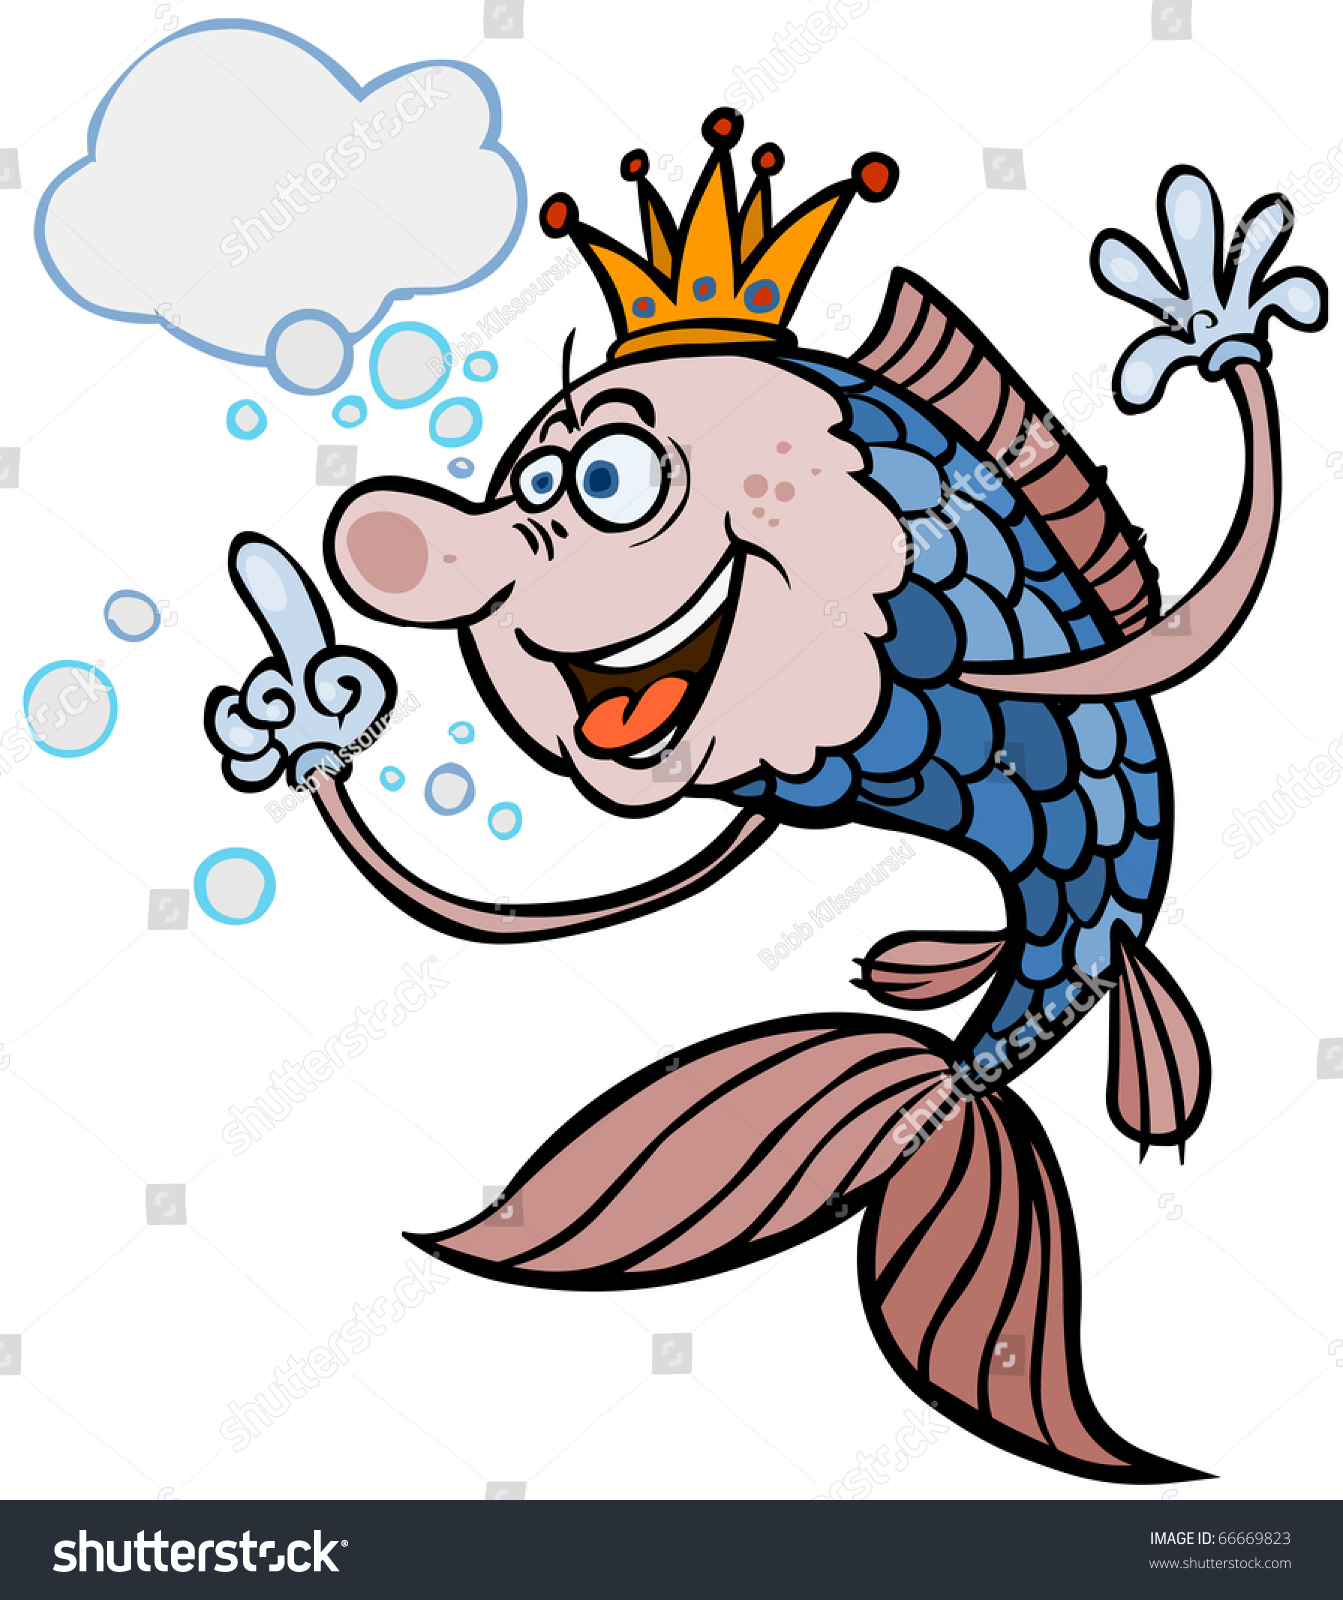 Funny Cartoon Fish Bubbles Stock Vector 66669823 - Shutterstock